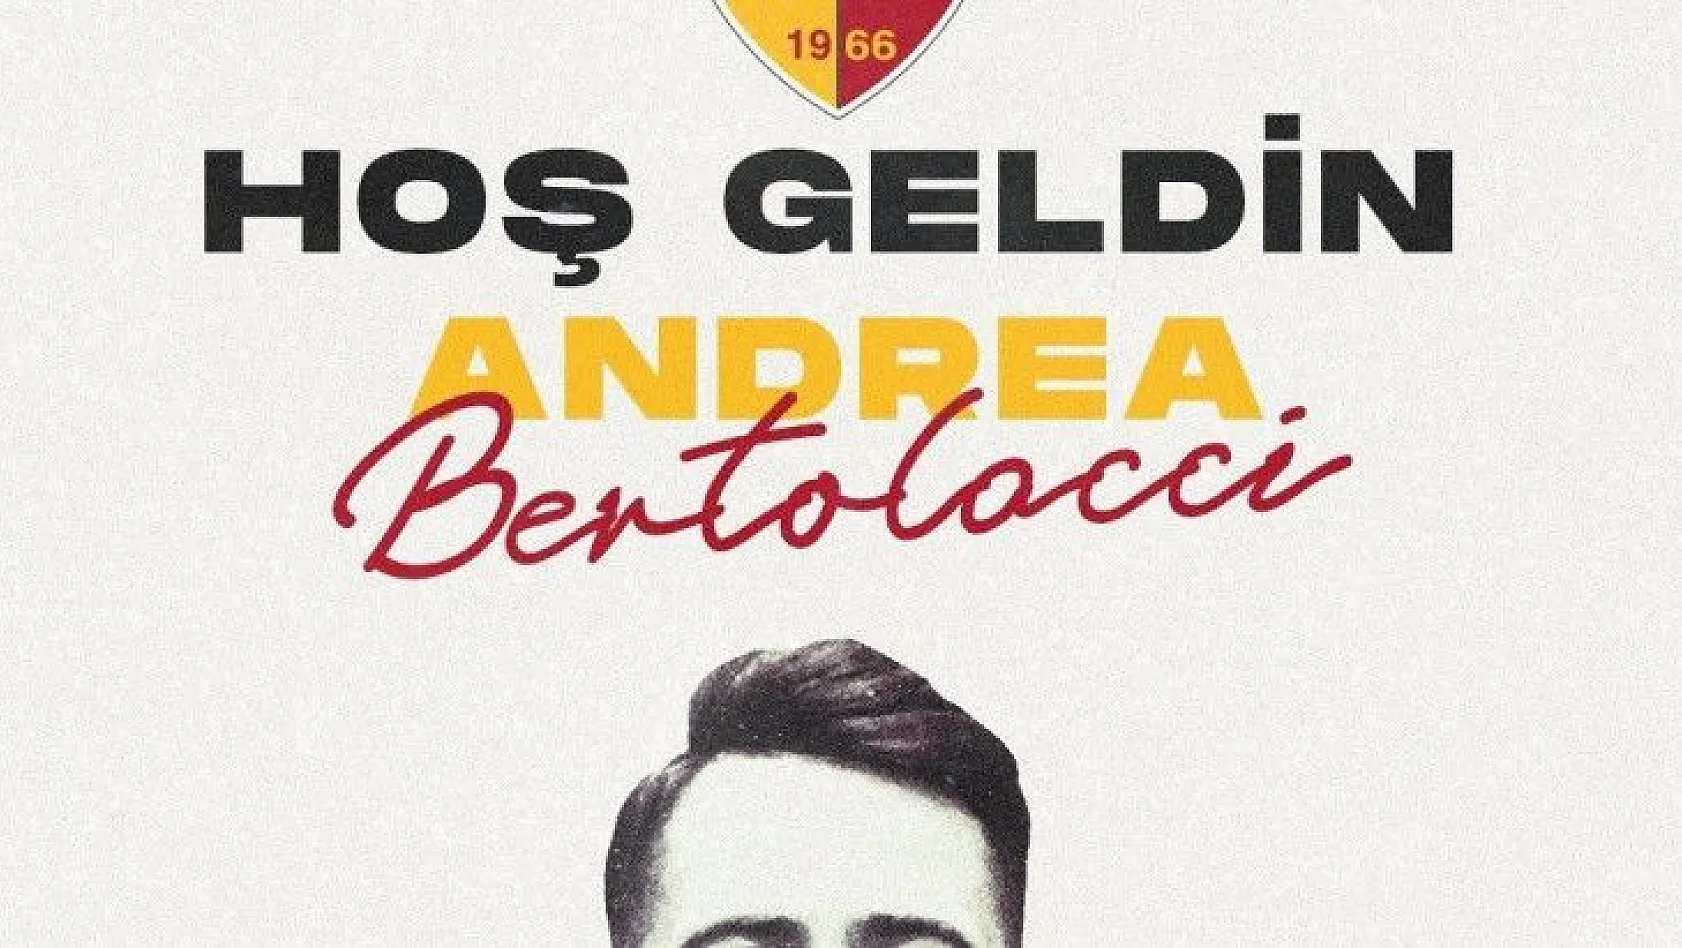 Andrea Bertolacci imzayı attı